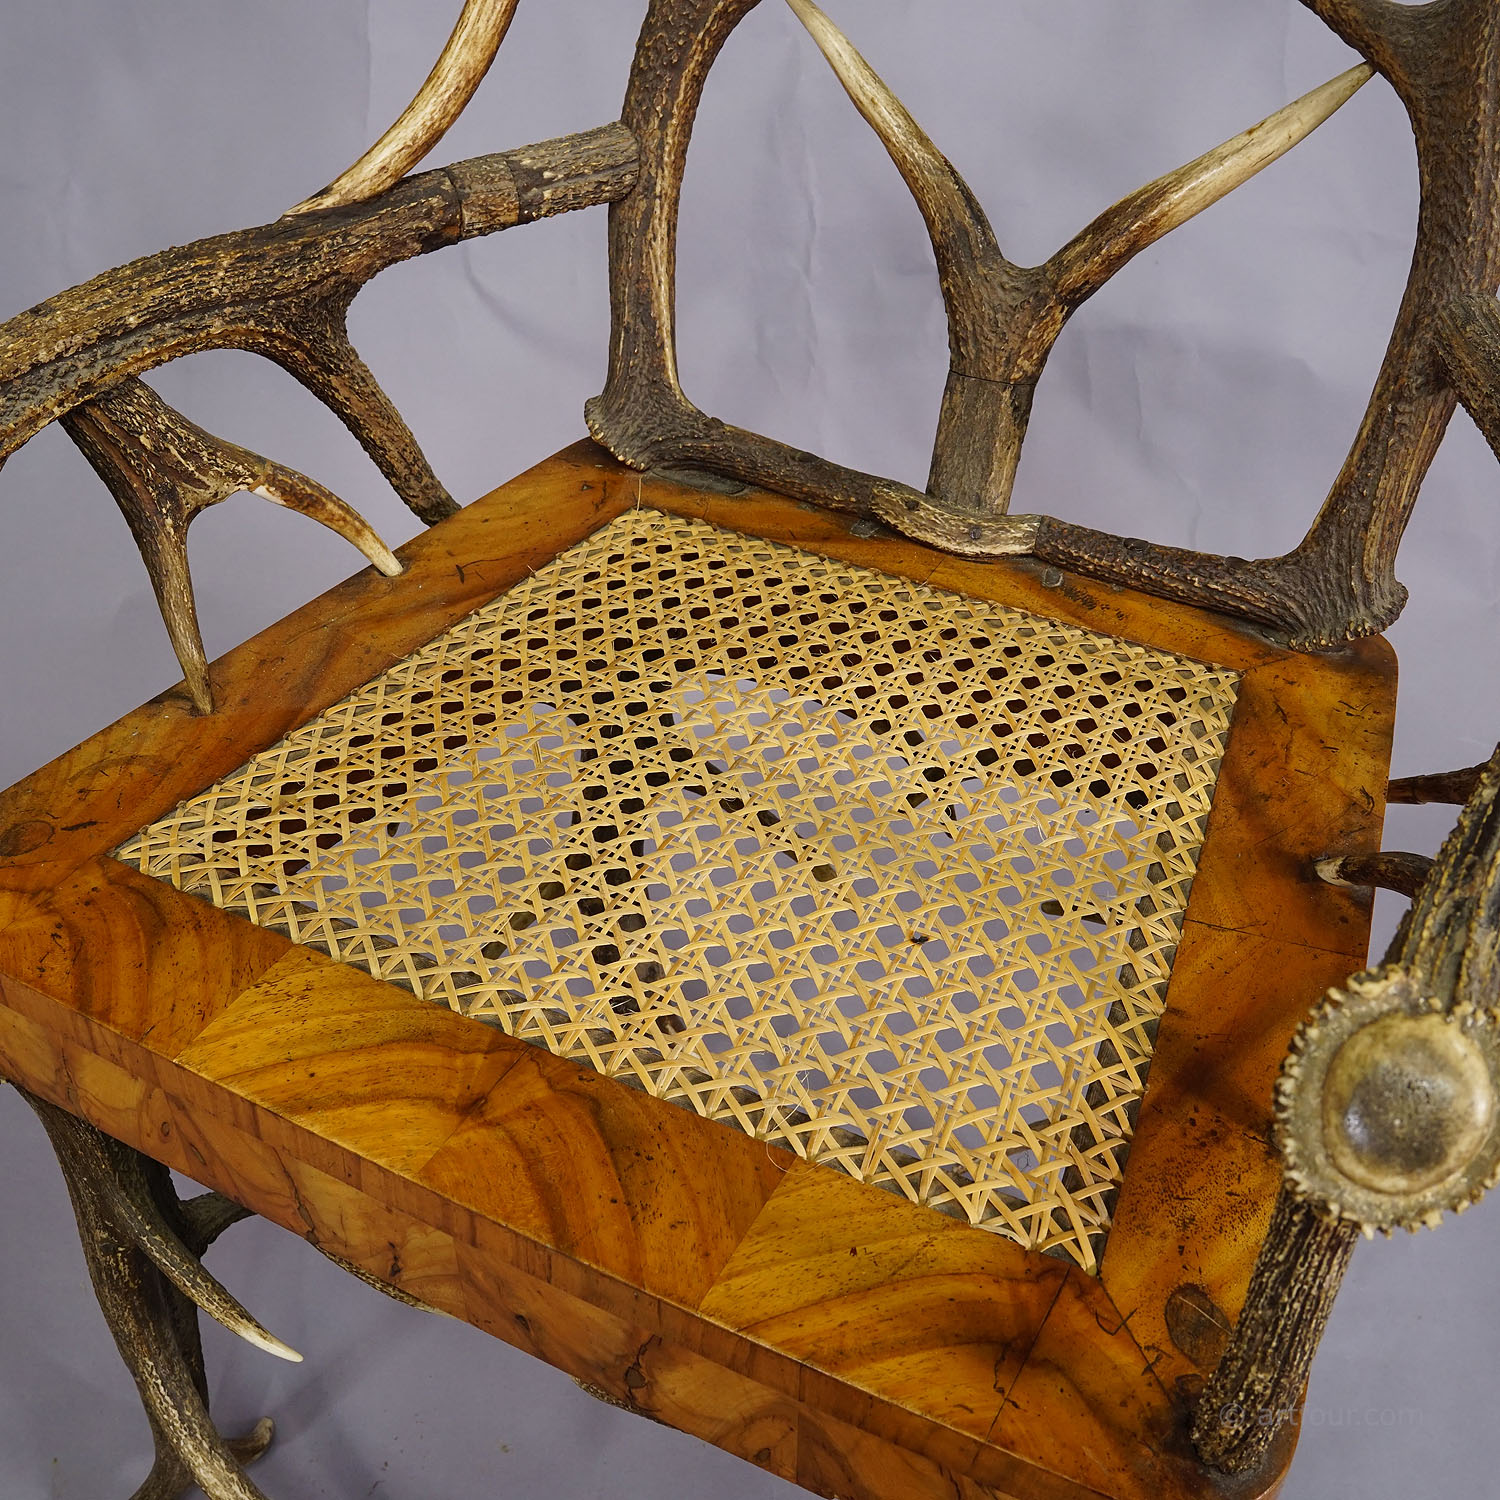 Black Forest Antler Arm Chair by J. A. K. Horn, Turingen 1840s